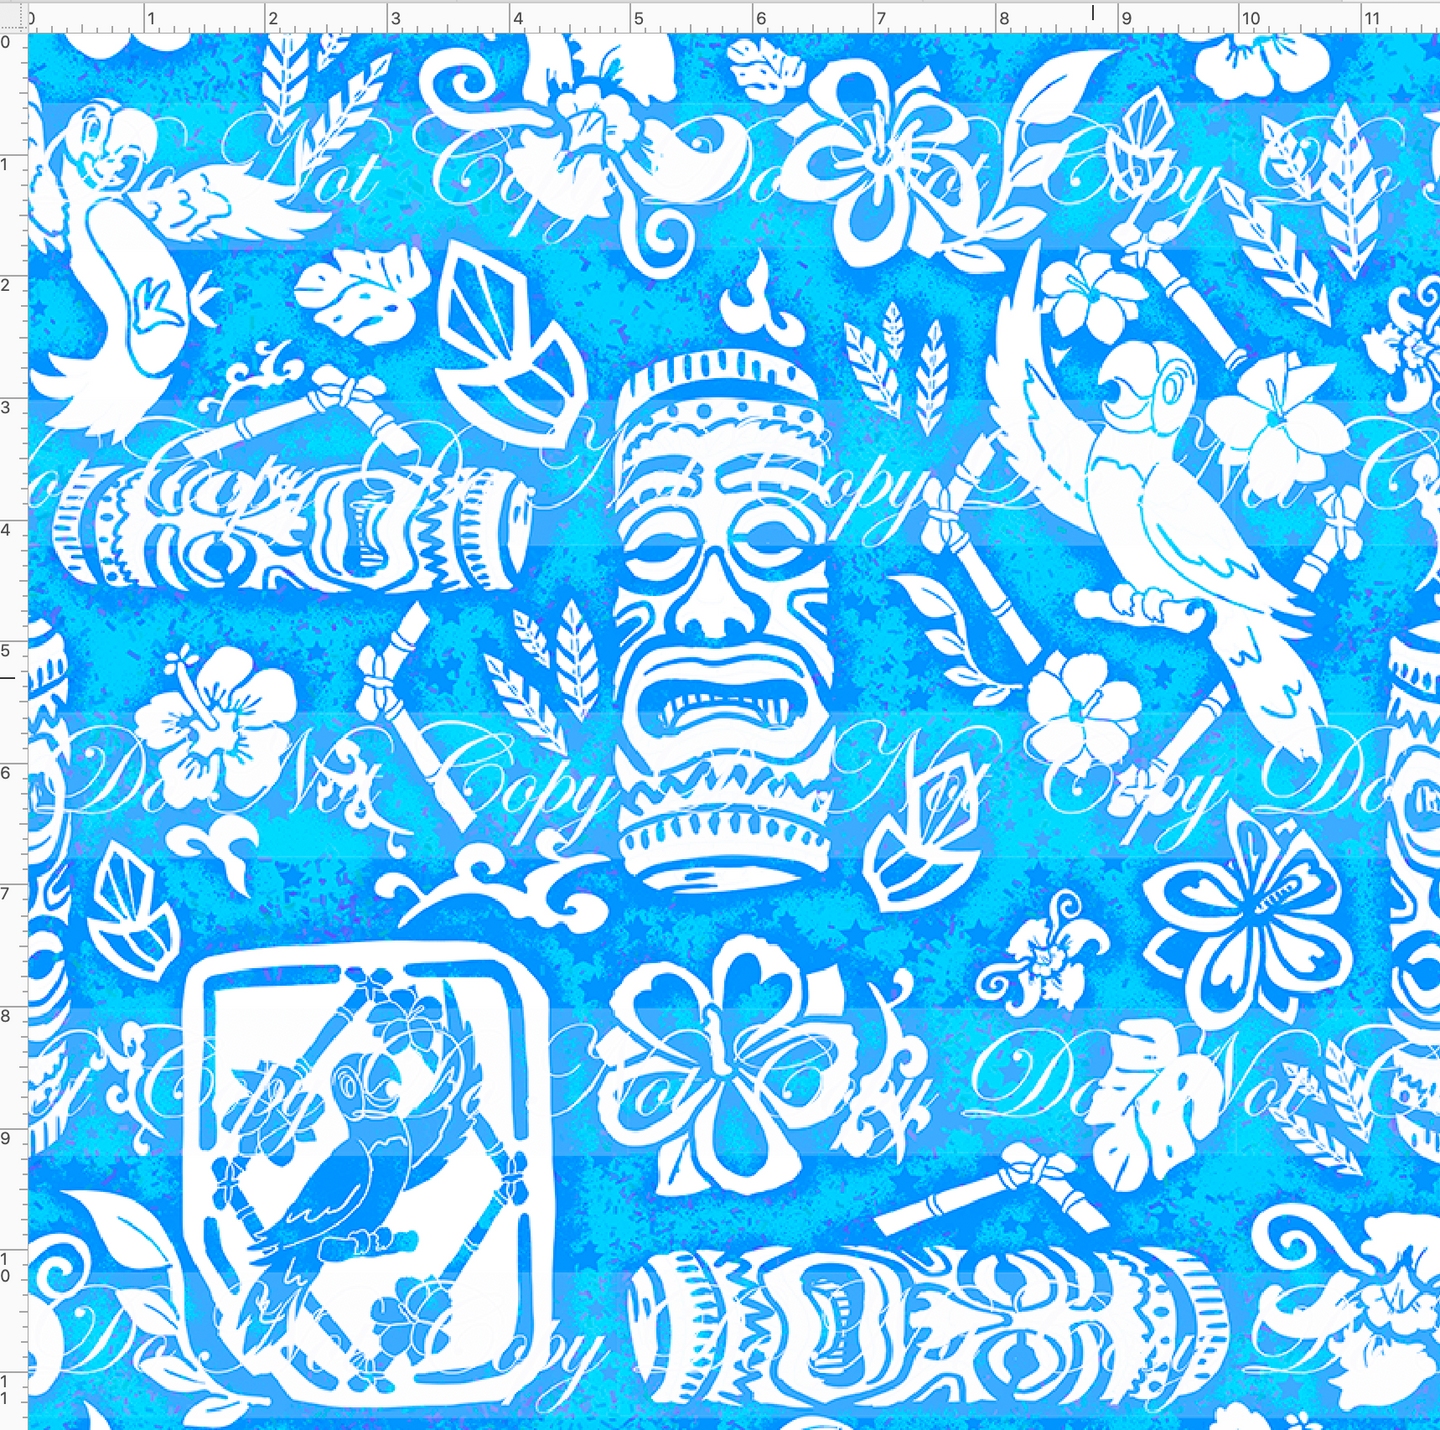 CATALOG - PREORDER R69 - Tiki Room - Symbol - Blue - LARGE SCALE